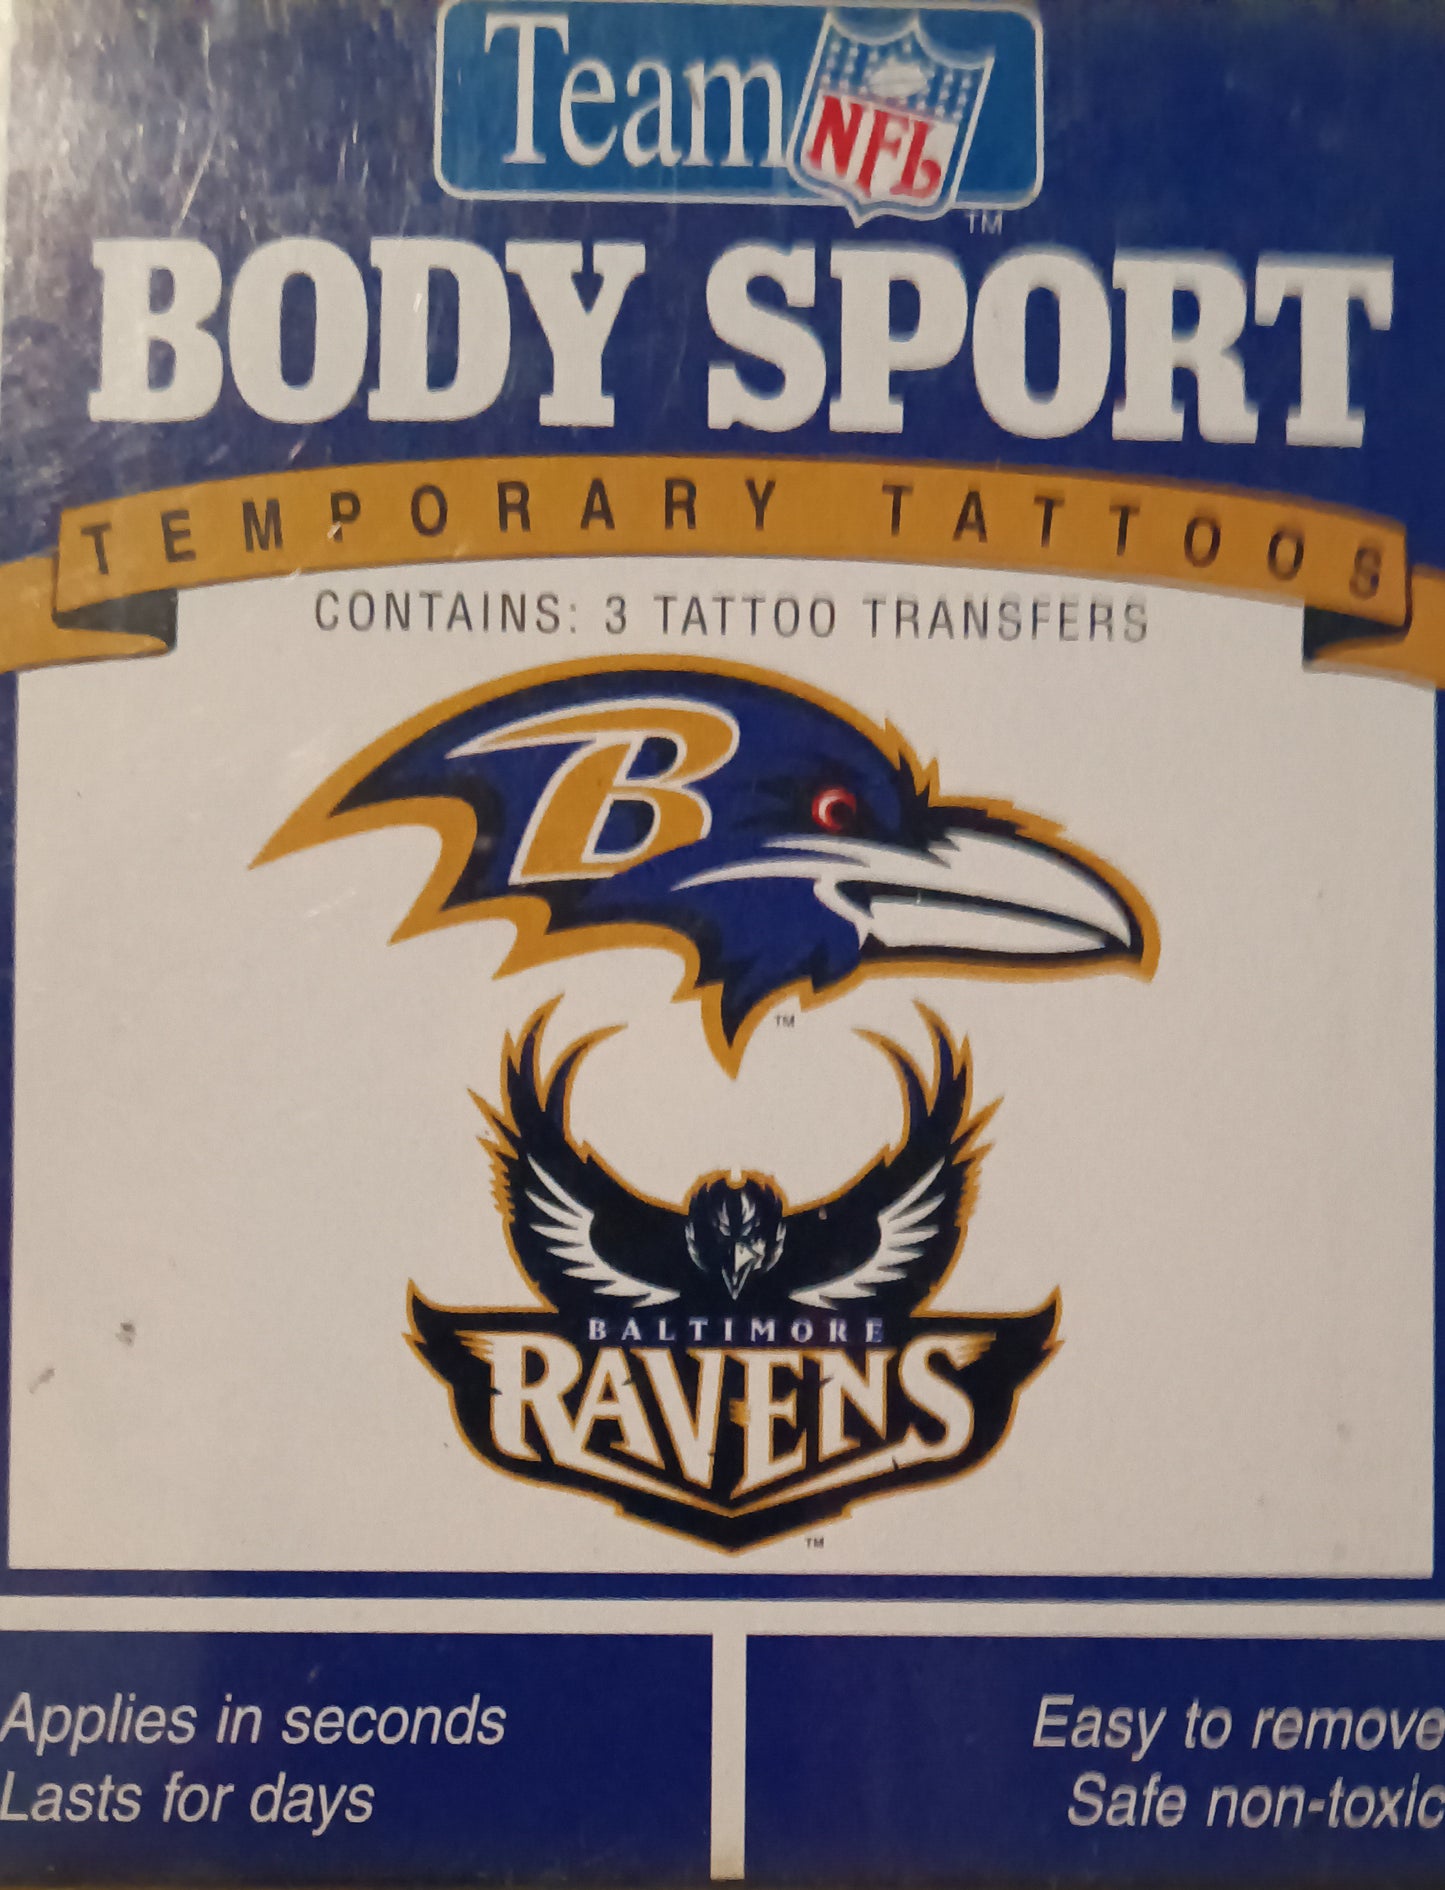 Team NFL Body Sport Temporary Tattoos